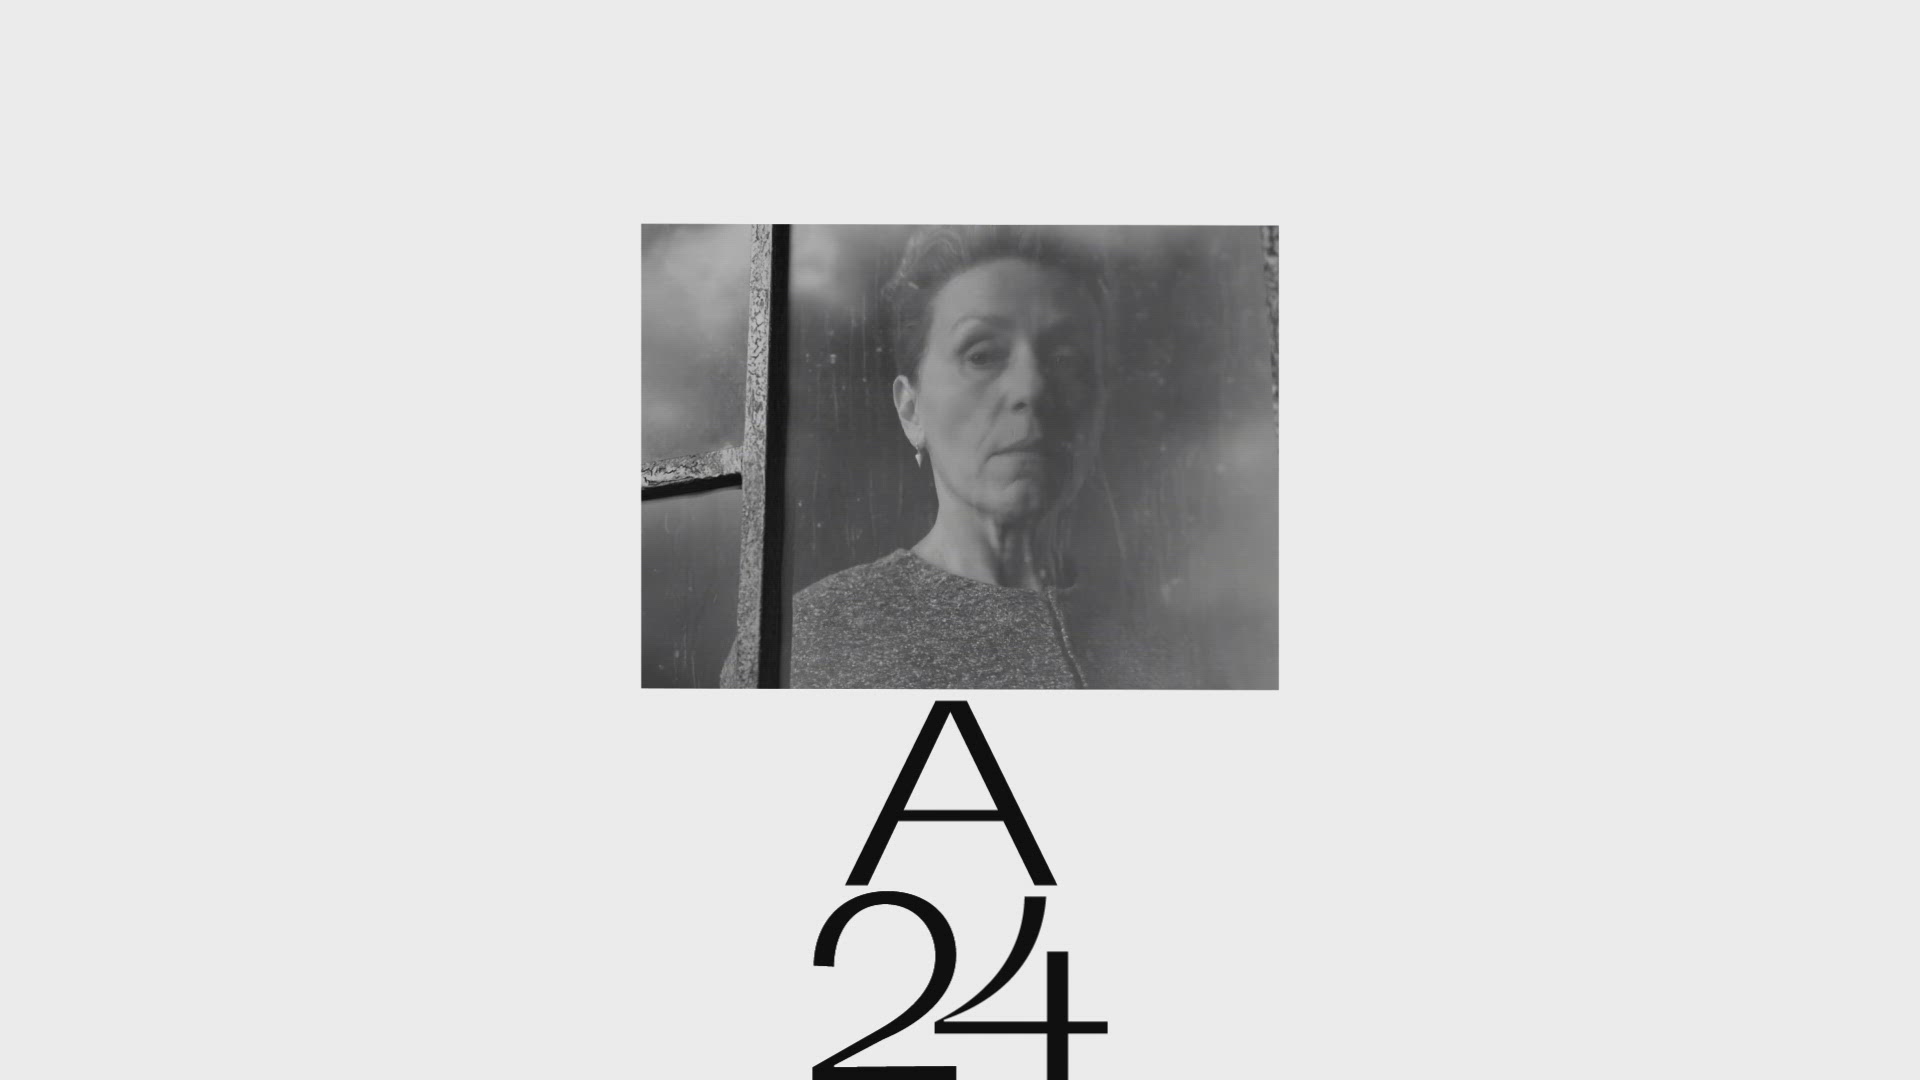 A24 Rebranding